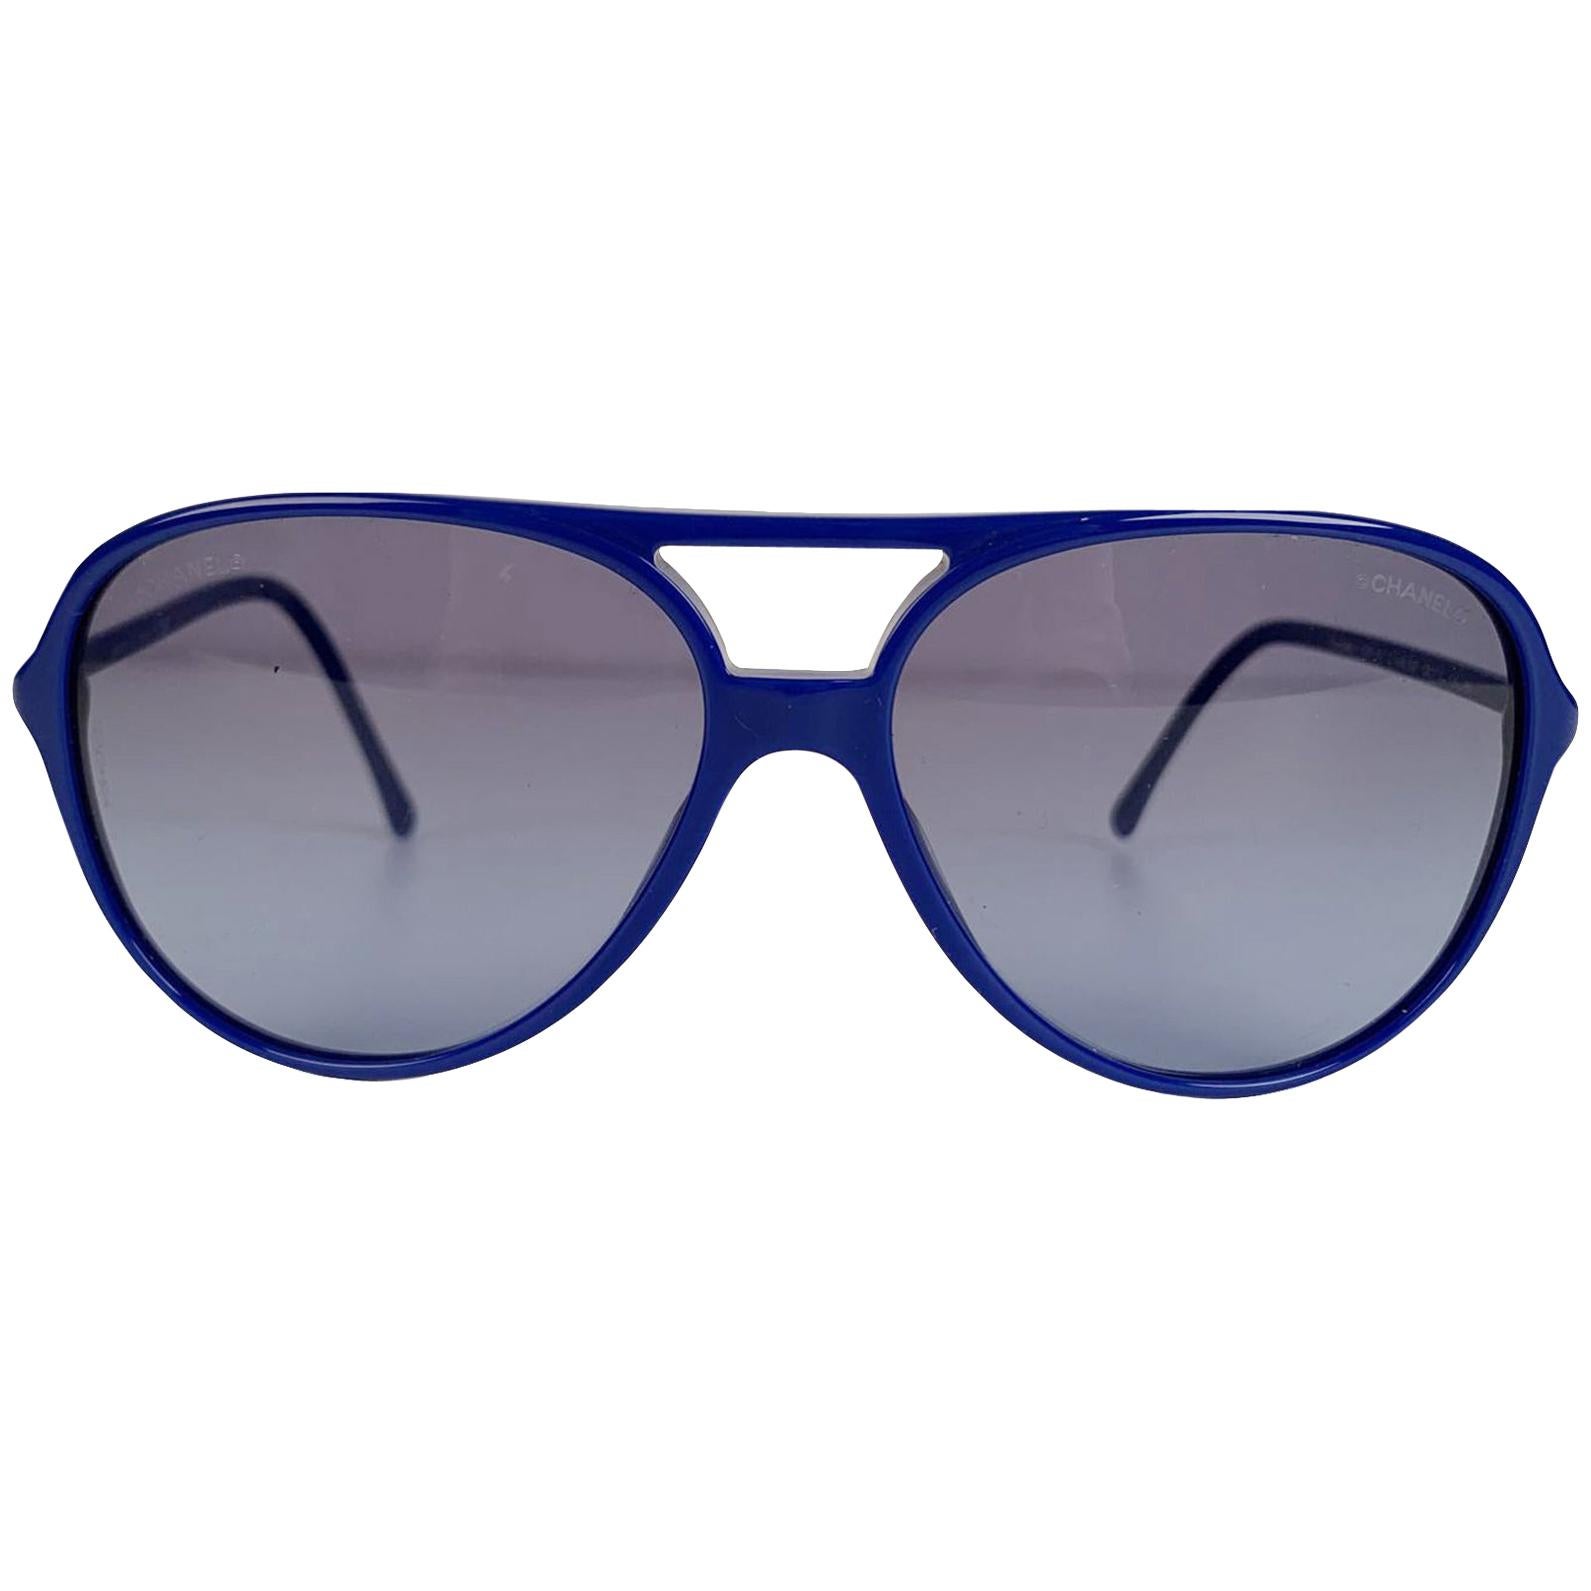 Chanel Blue Acetate Aviator Sunglasses Mod 5287 A Small Logo